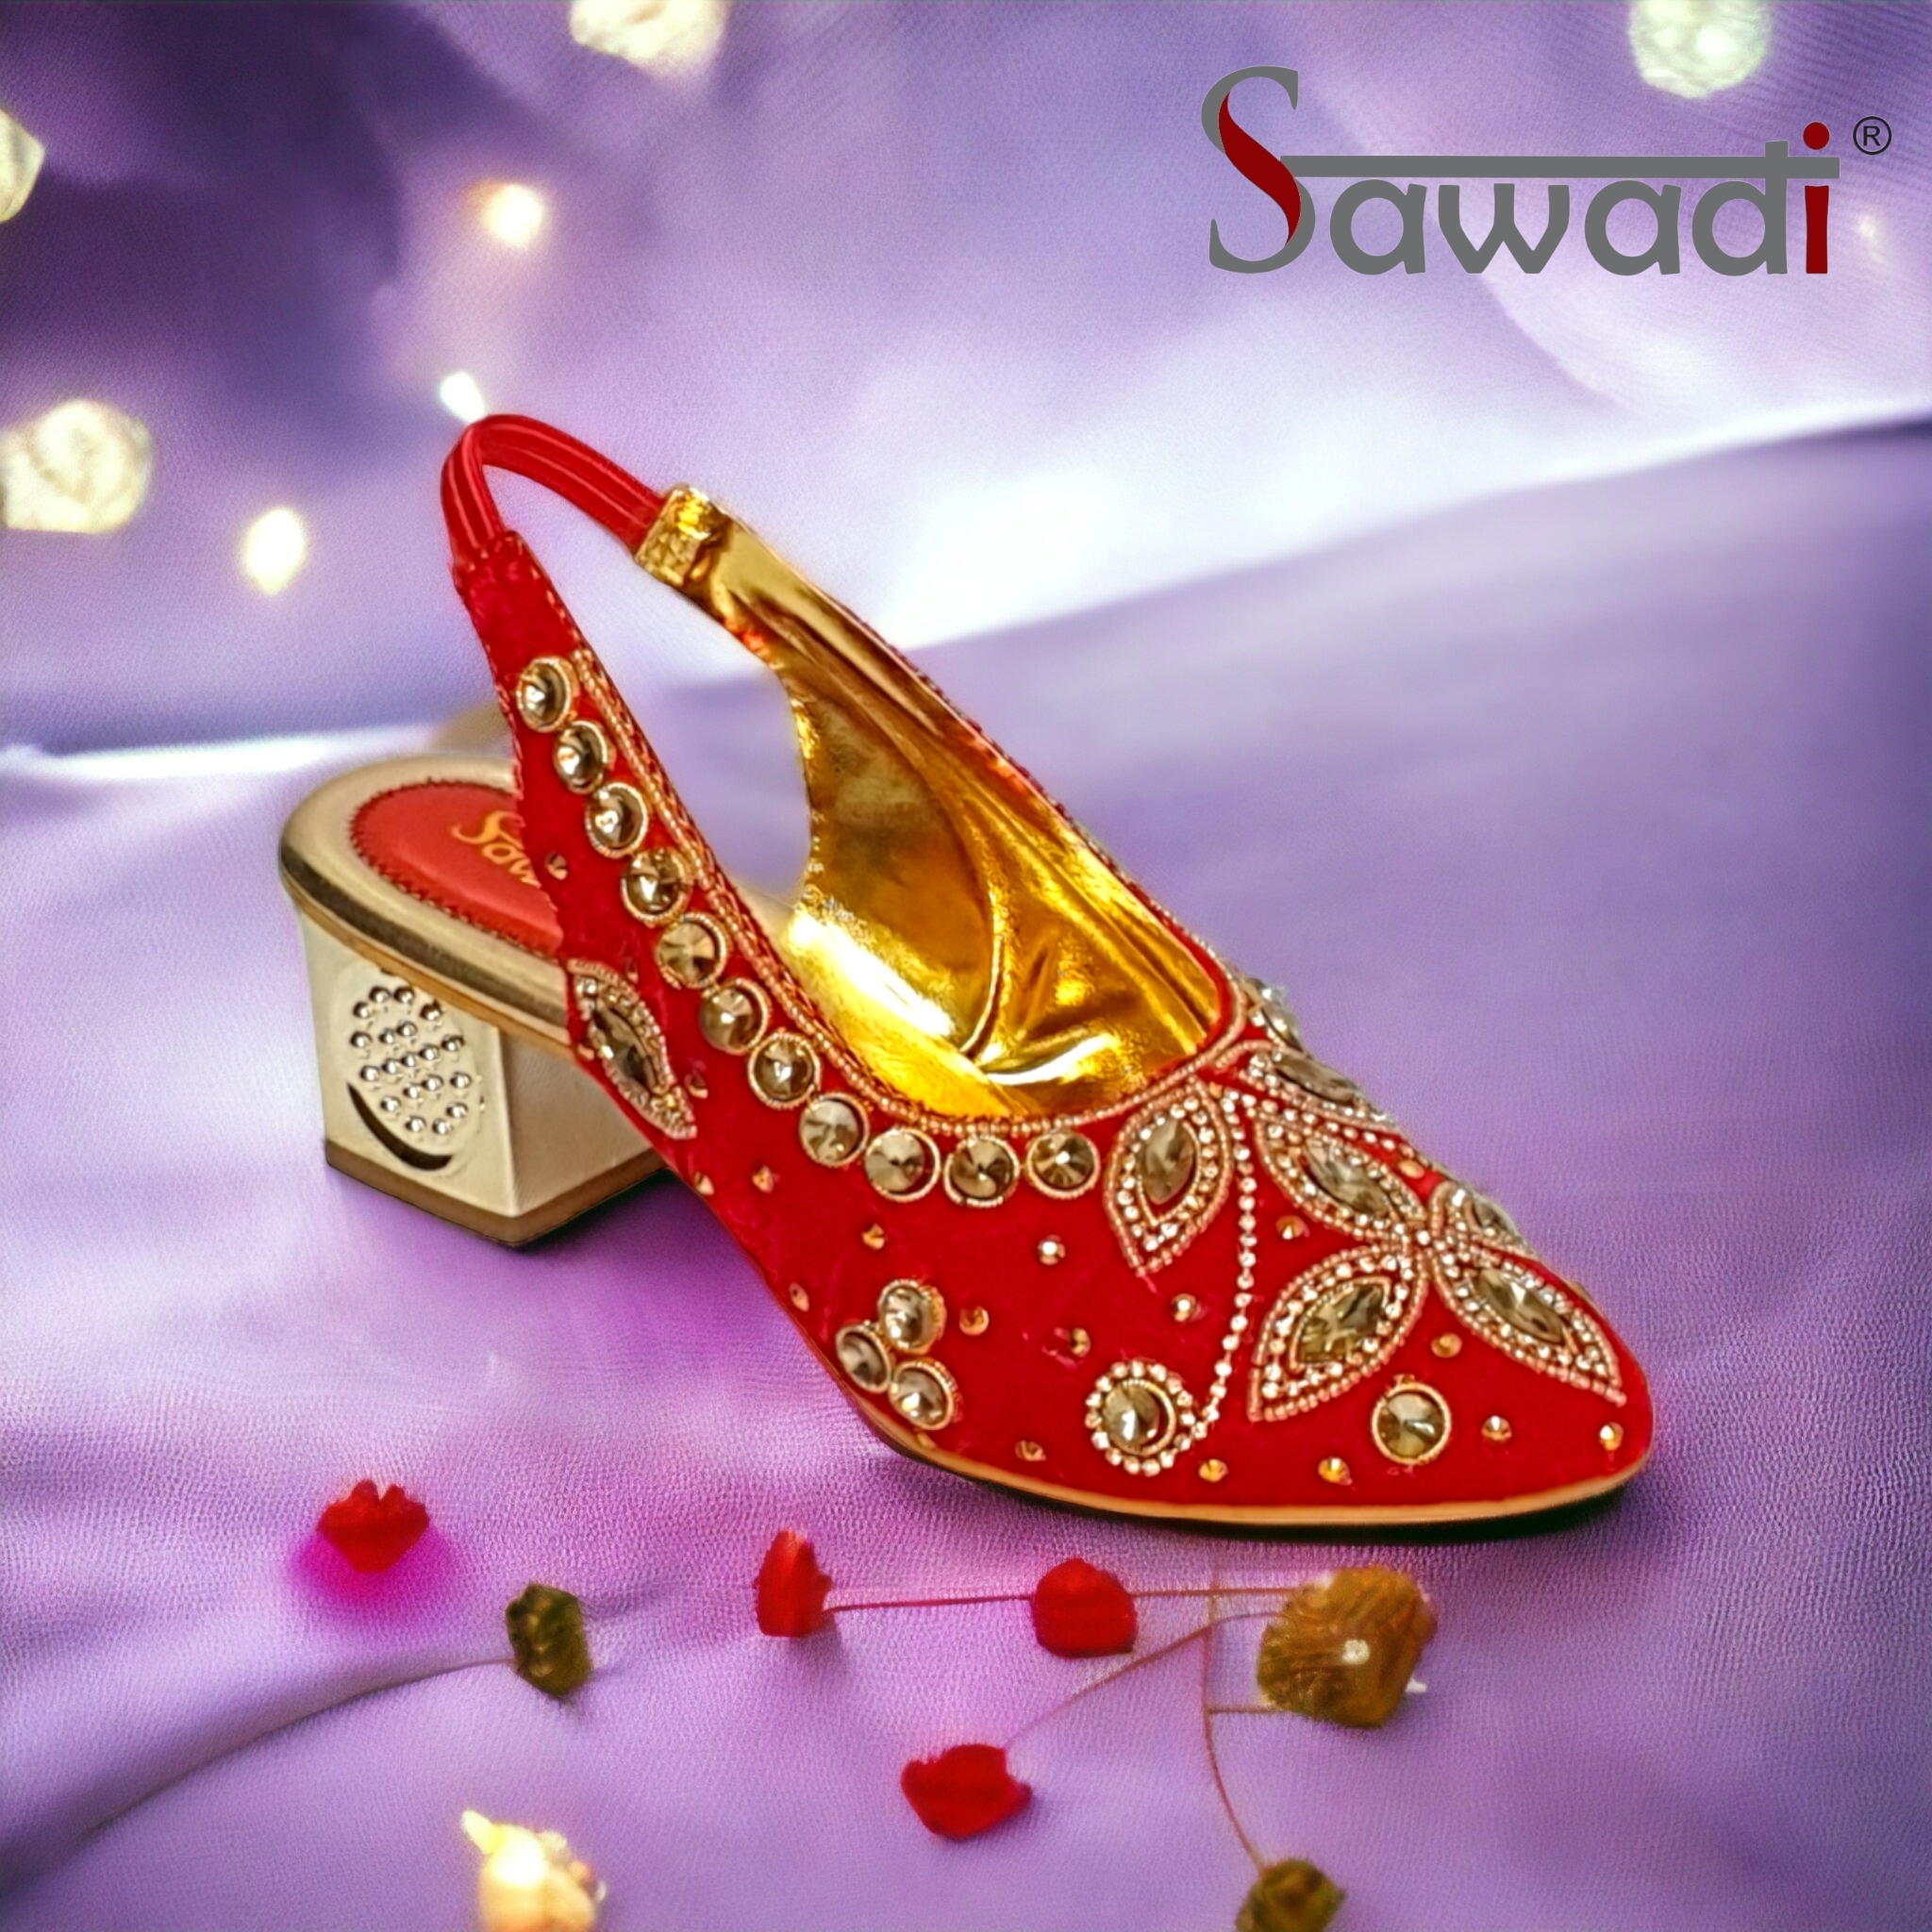 SAWADI | Sawadi Women Red Heel Bunto undefined